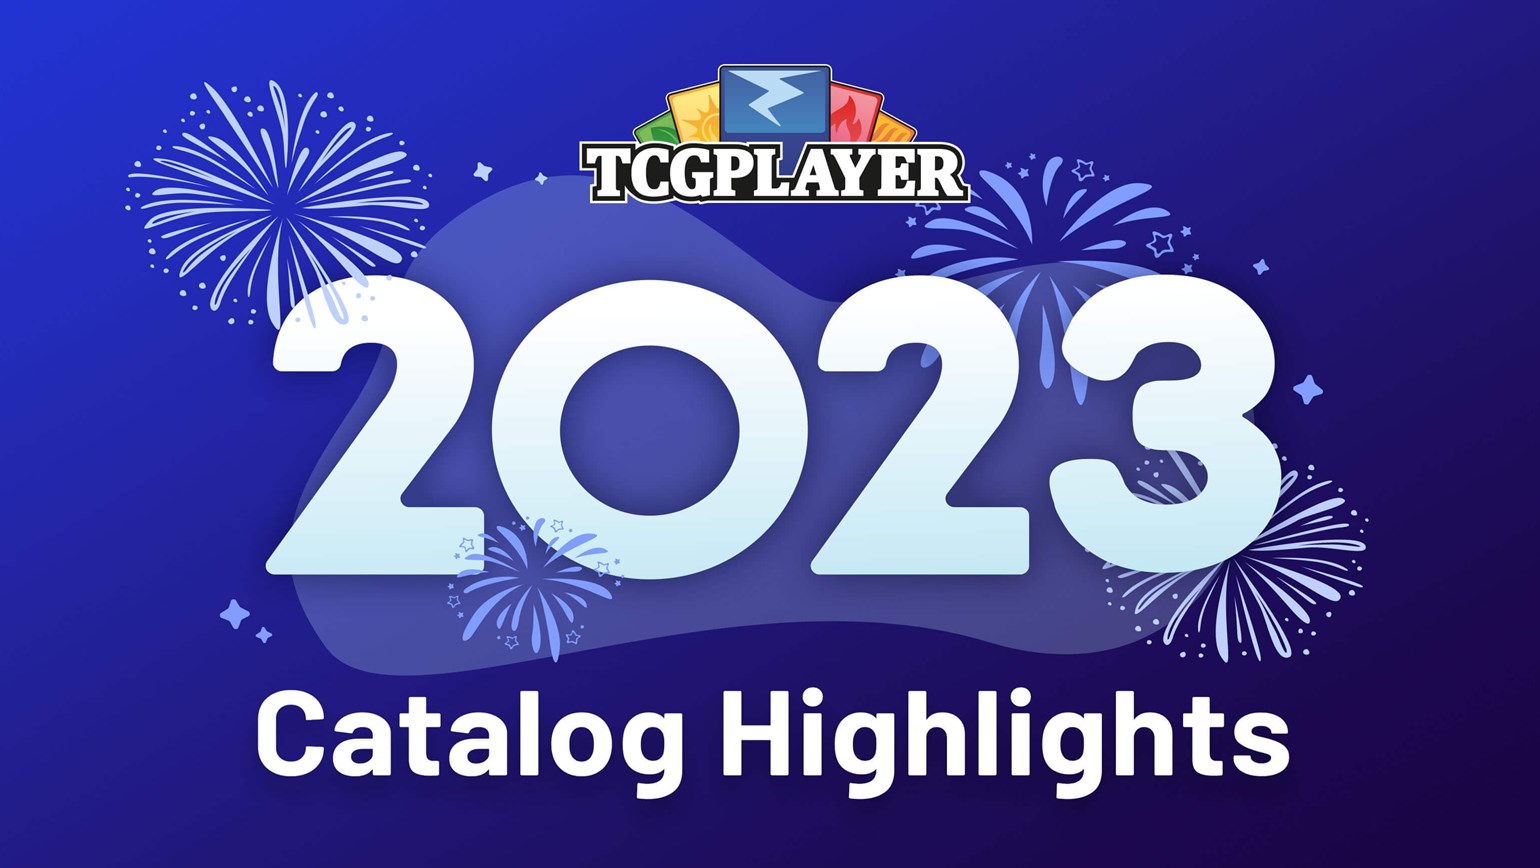 TCGplayer Catalog Highlights of 2023!